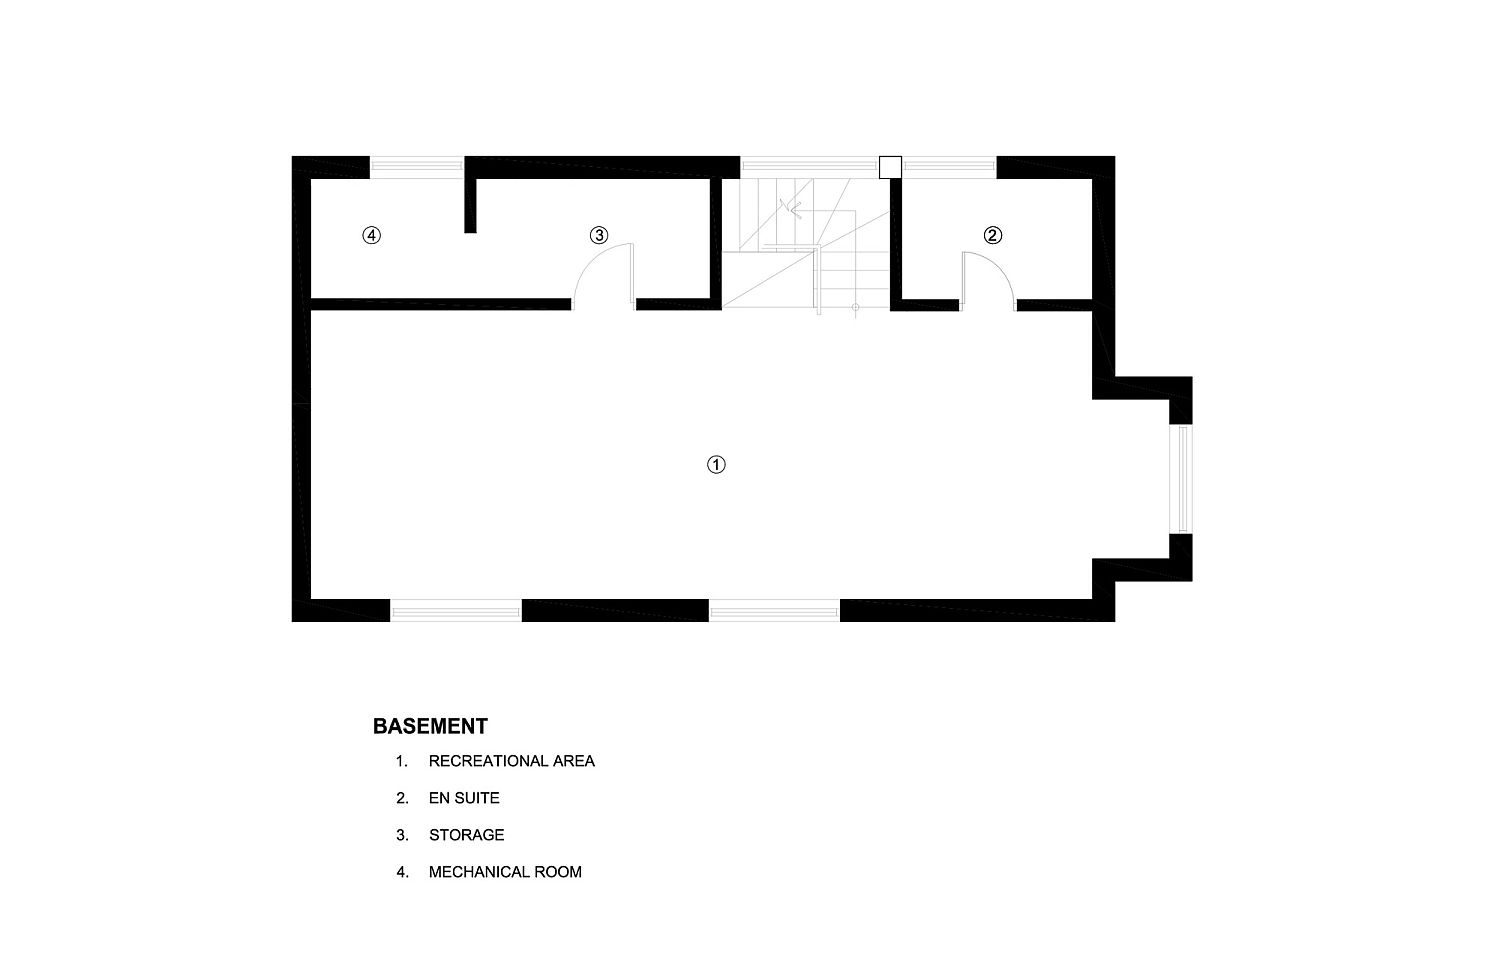 Basement floor plan of the NY House